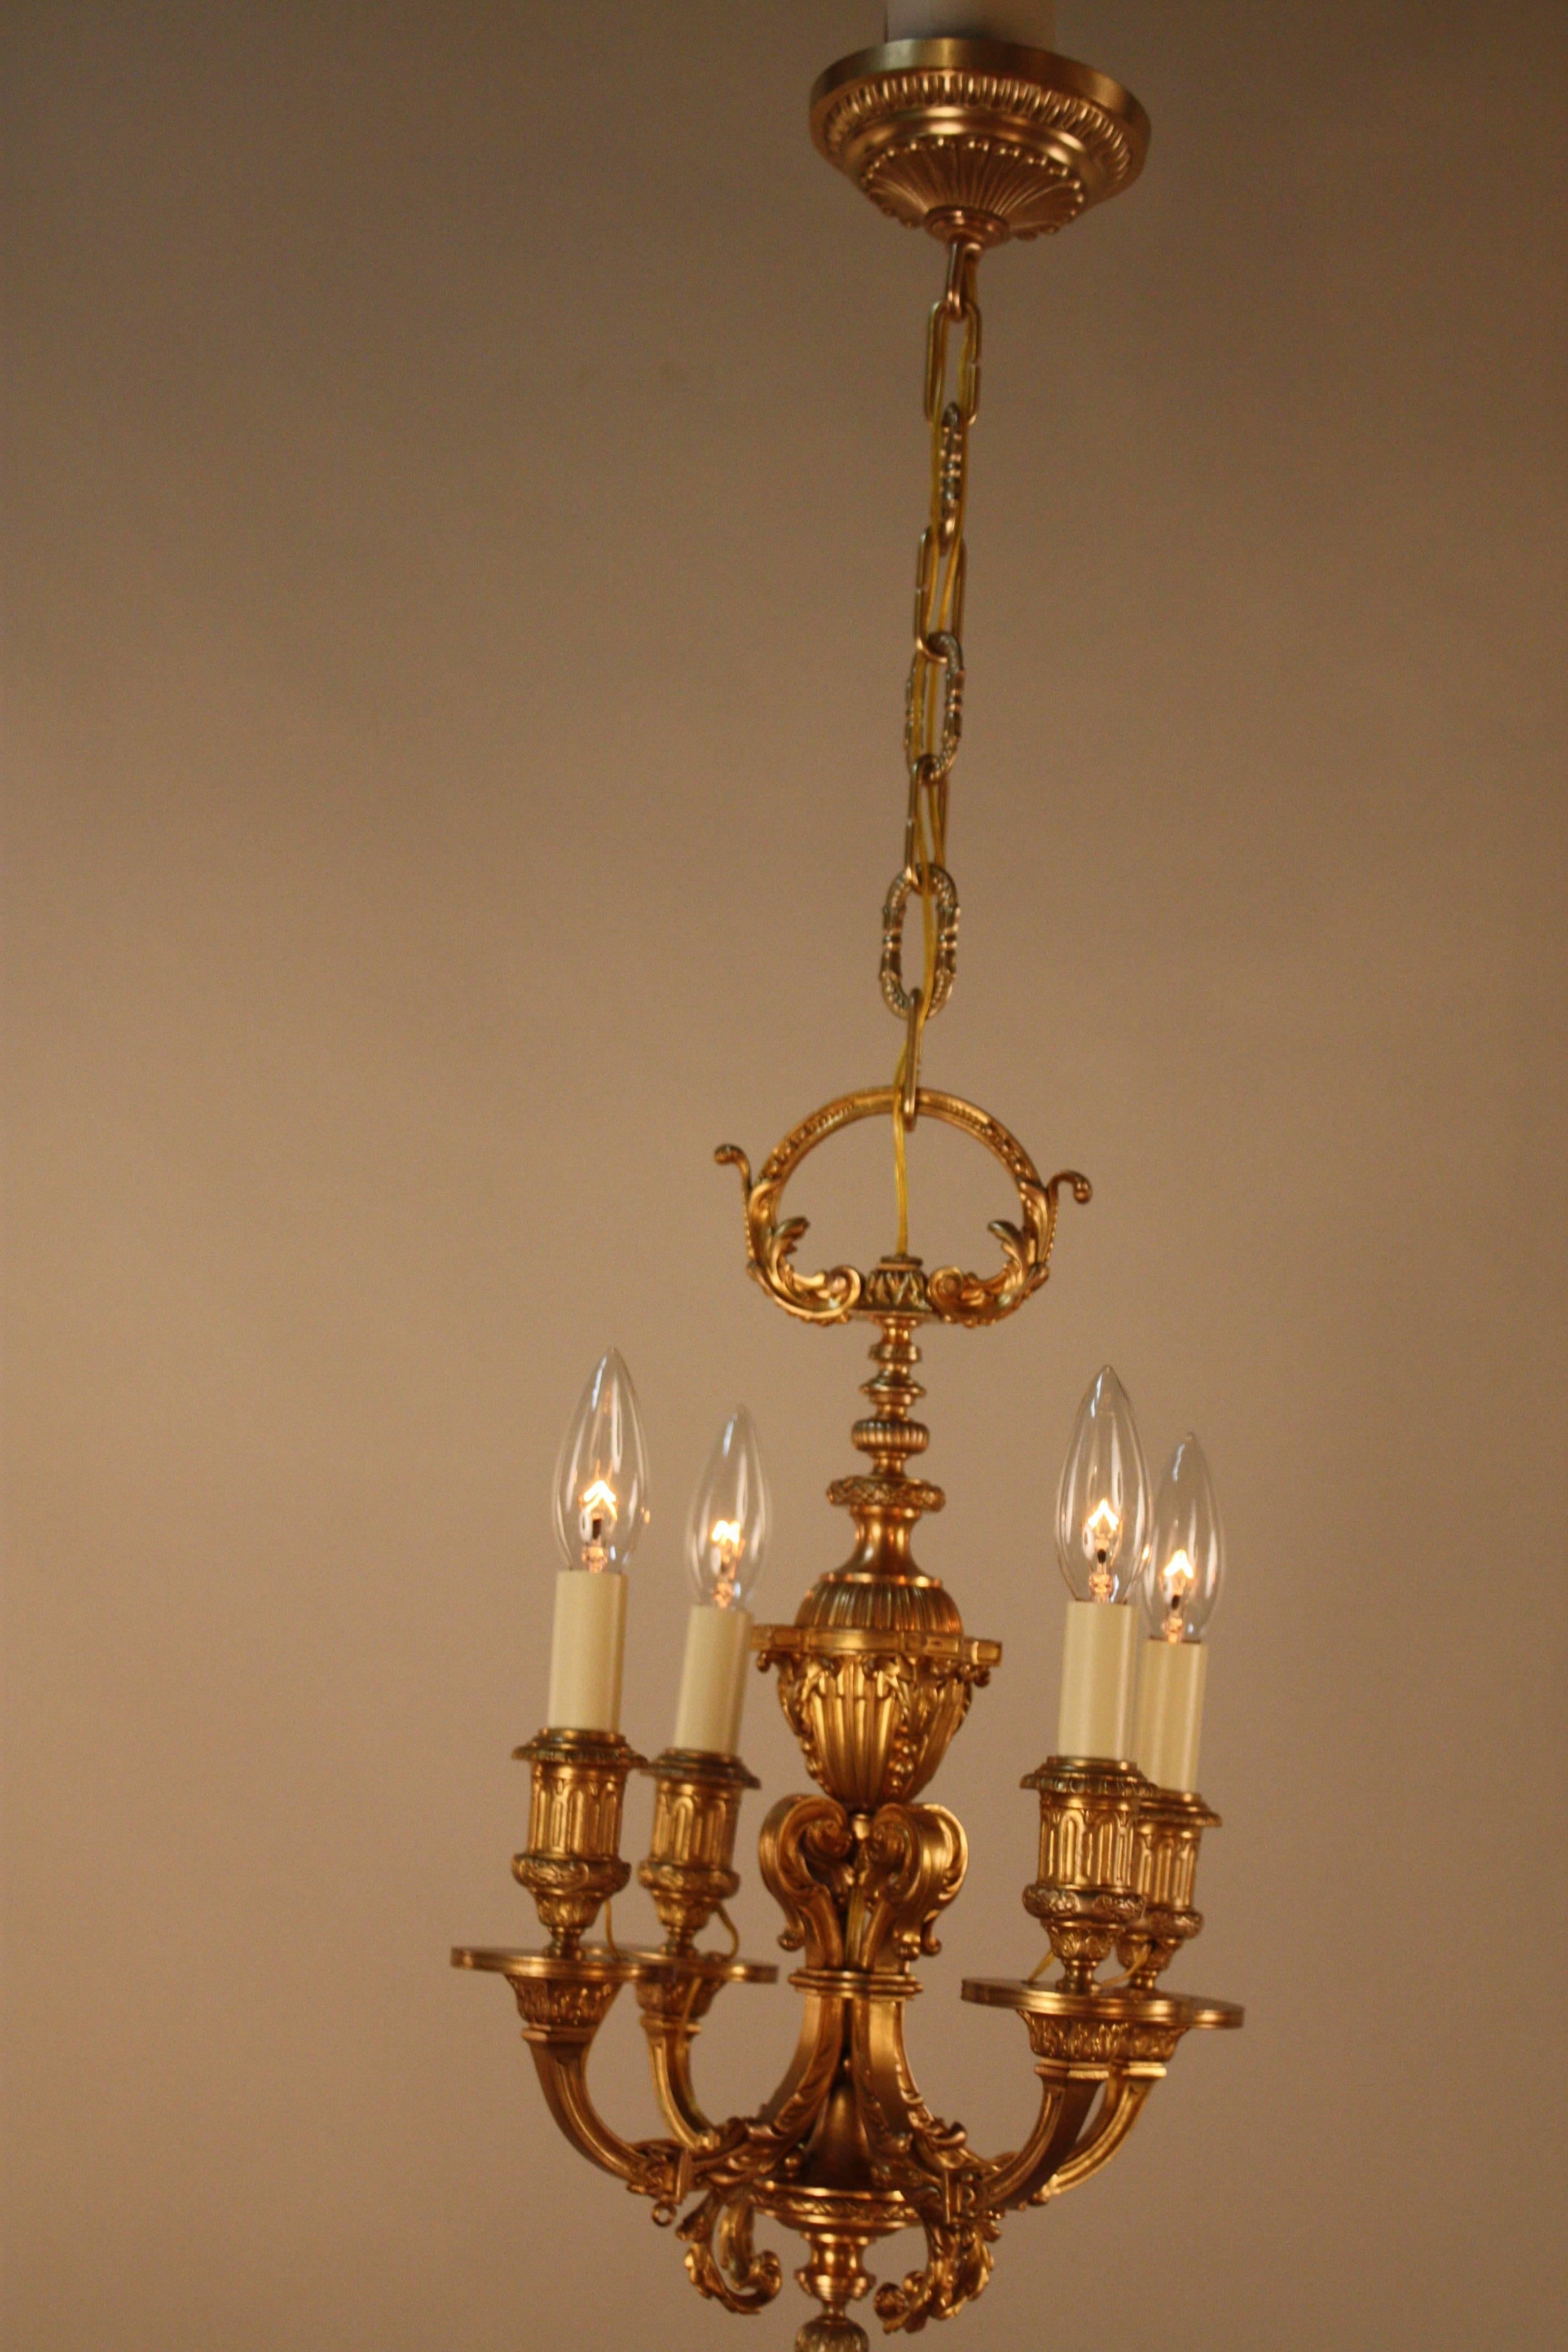 Elegant four light Dore bronze chandelier.
Minimum height fully installed is 21